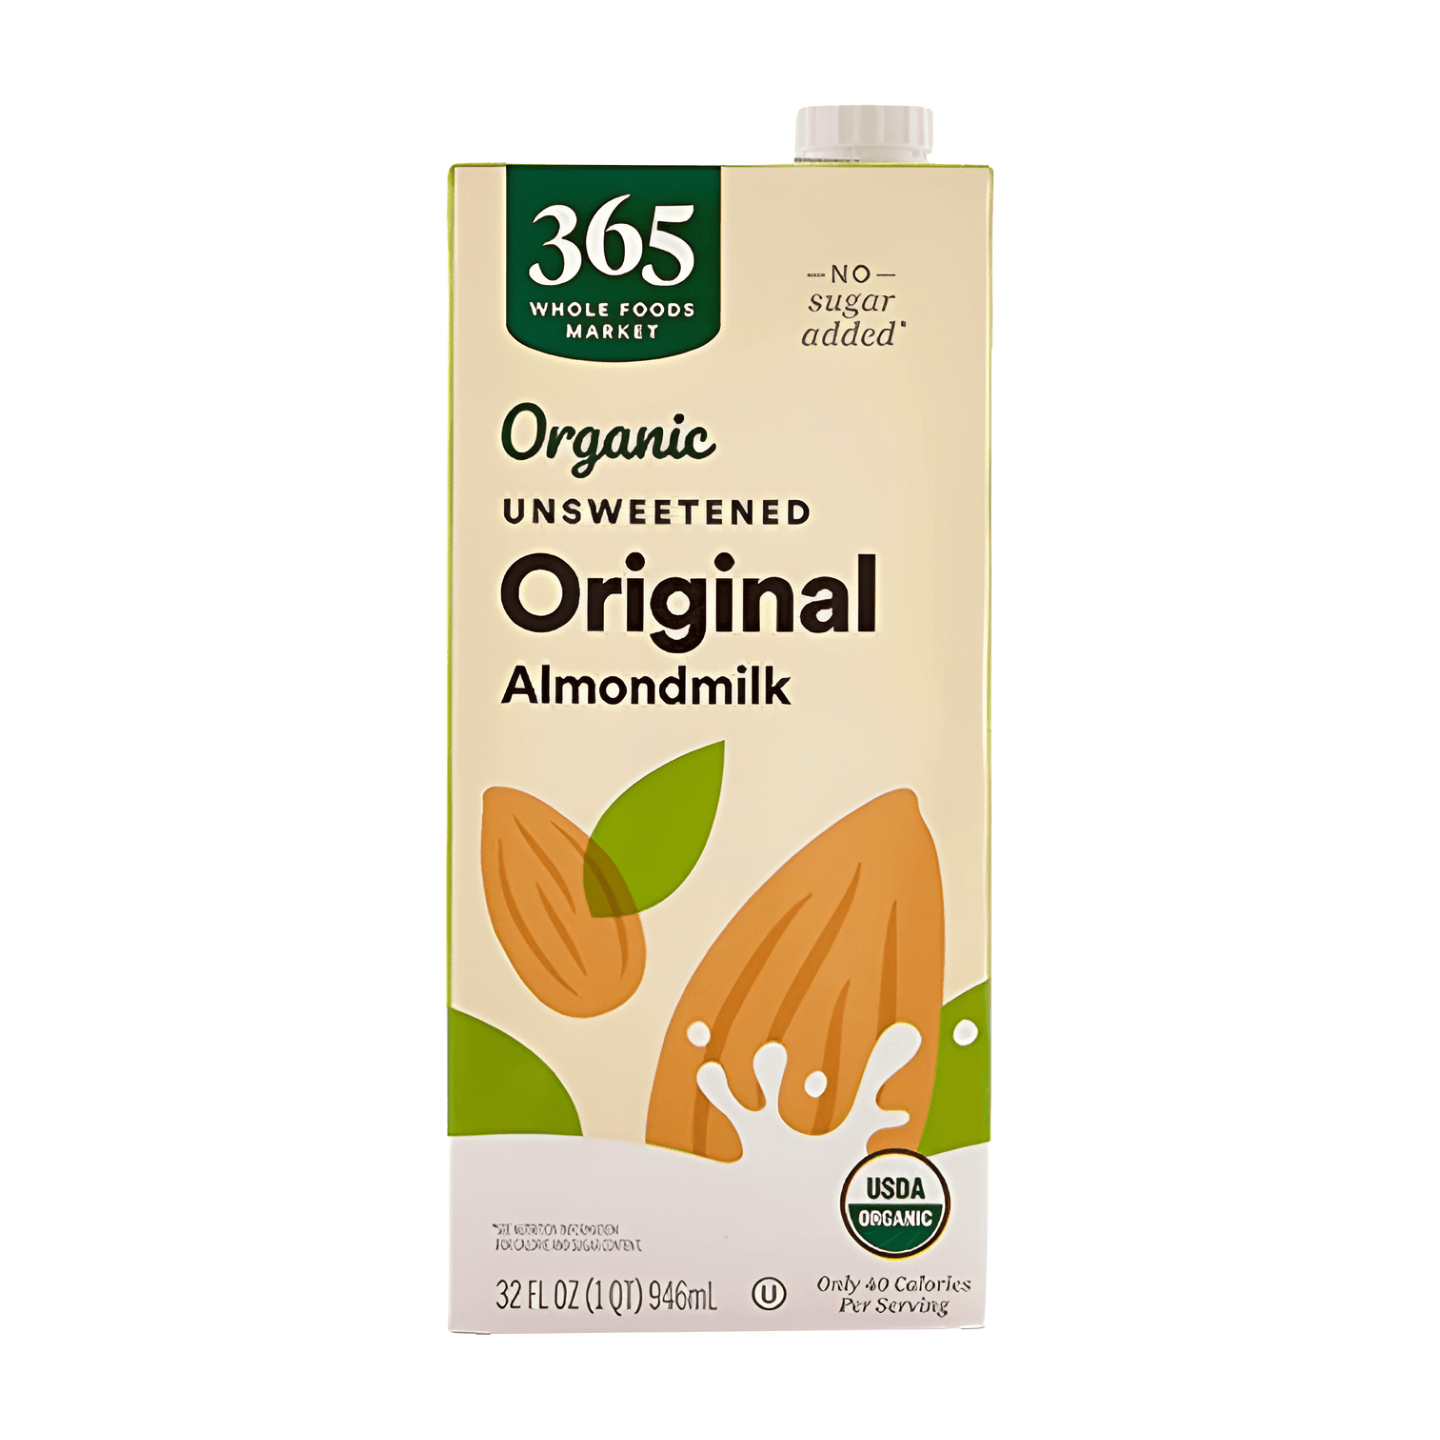 Wholefoods 365 Organic Unsweetened Almondmilk Shelf-Stable